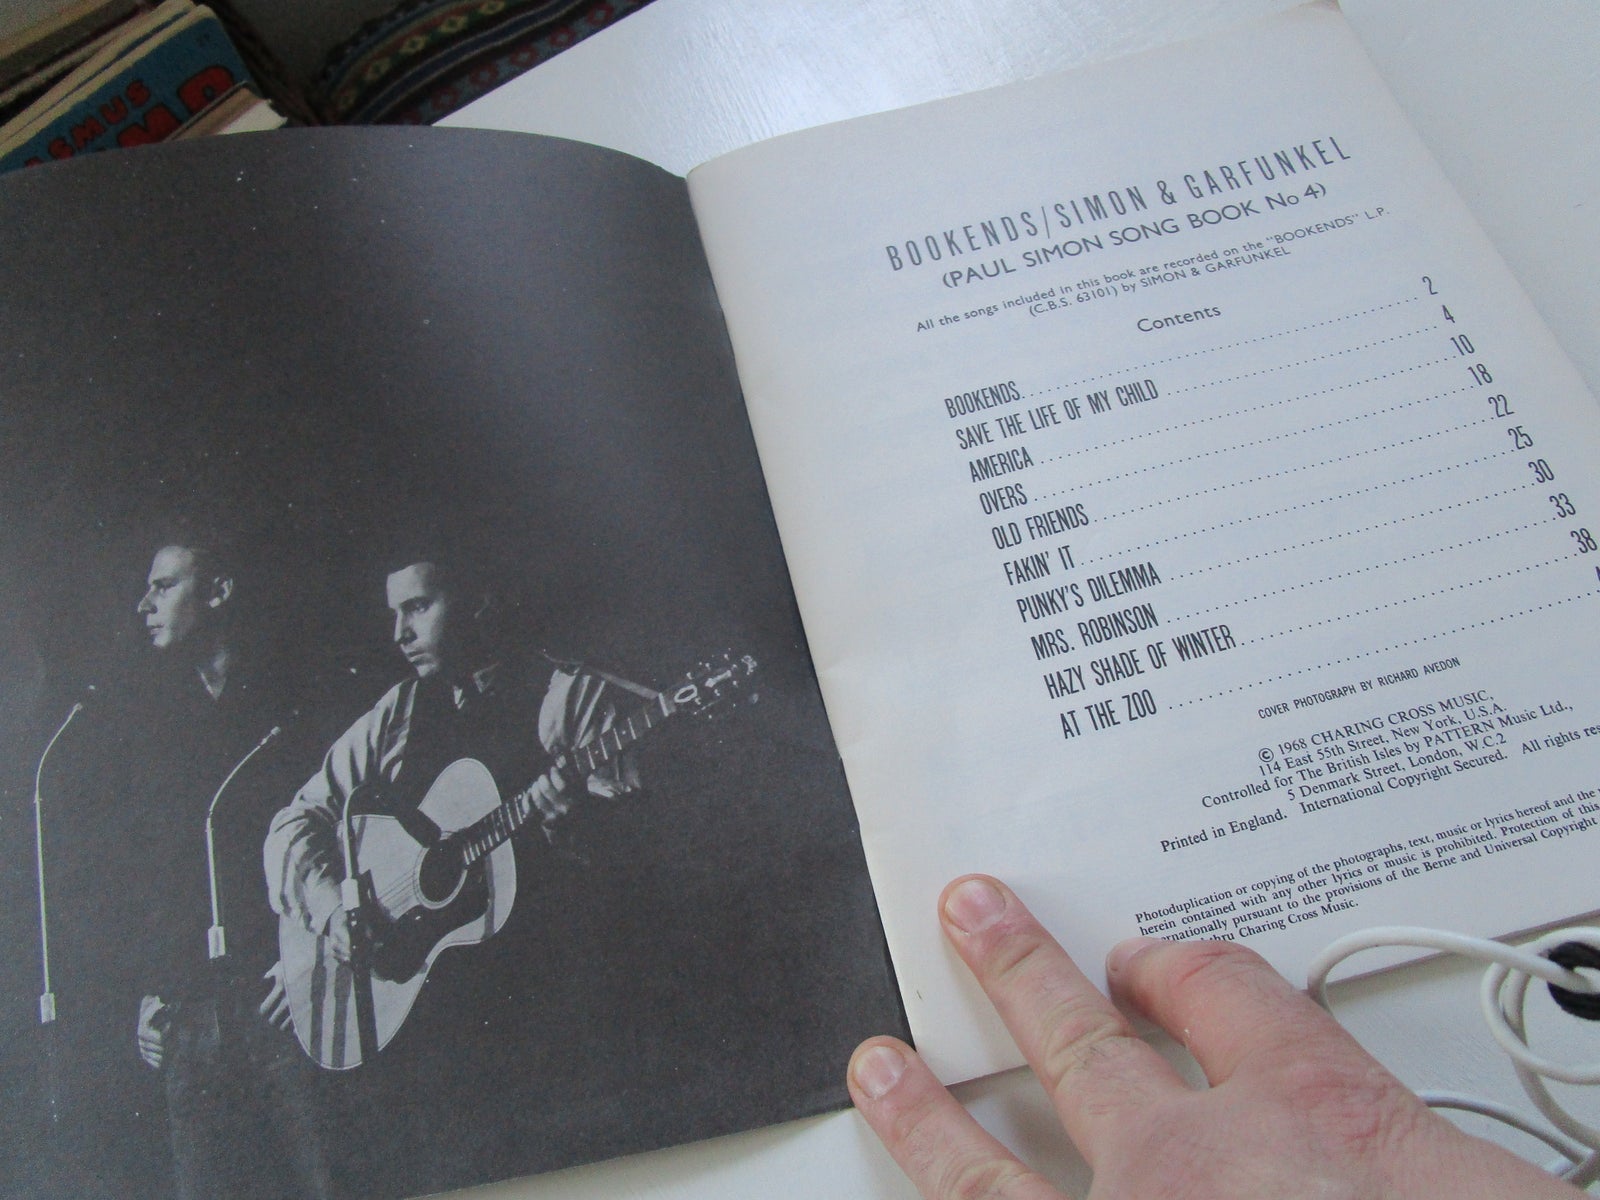 Simon & Garfunkel Bookends Sheet Music Book